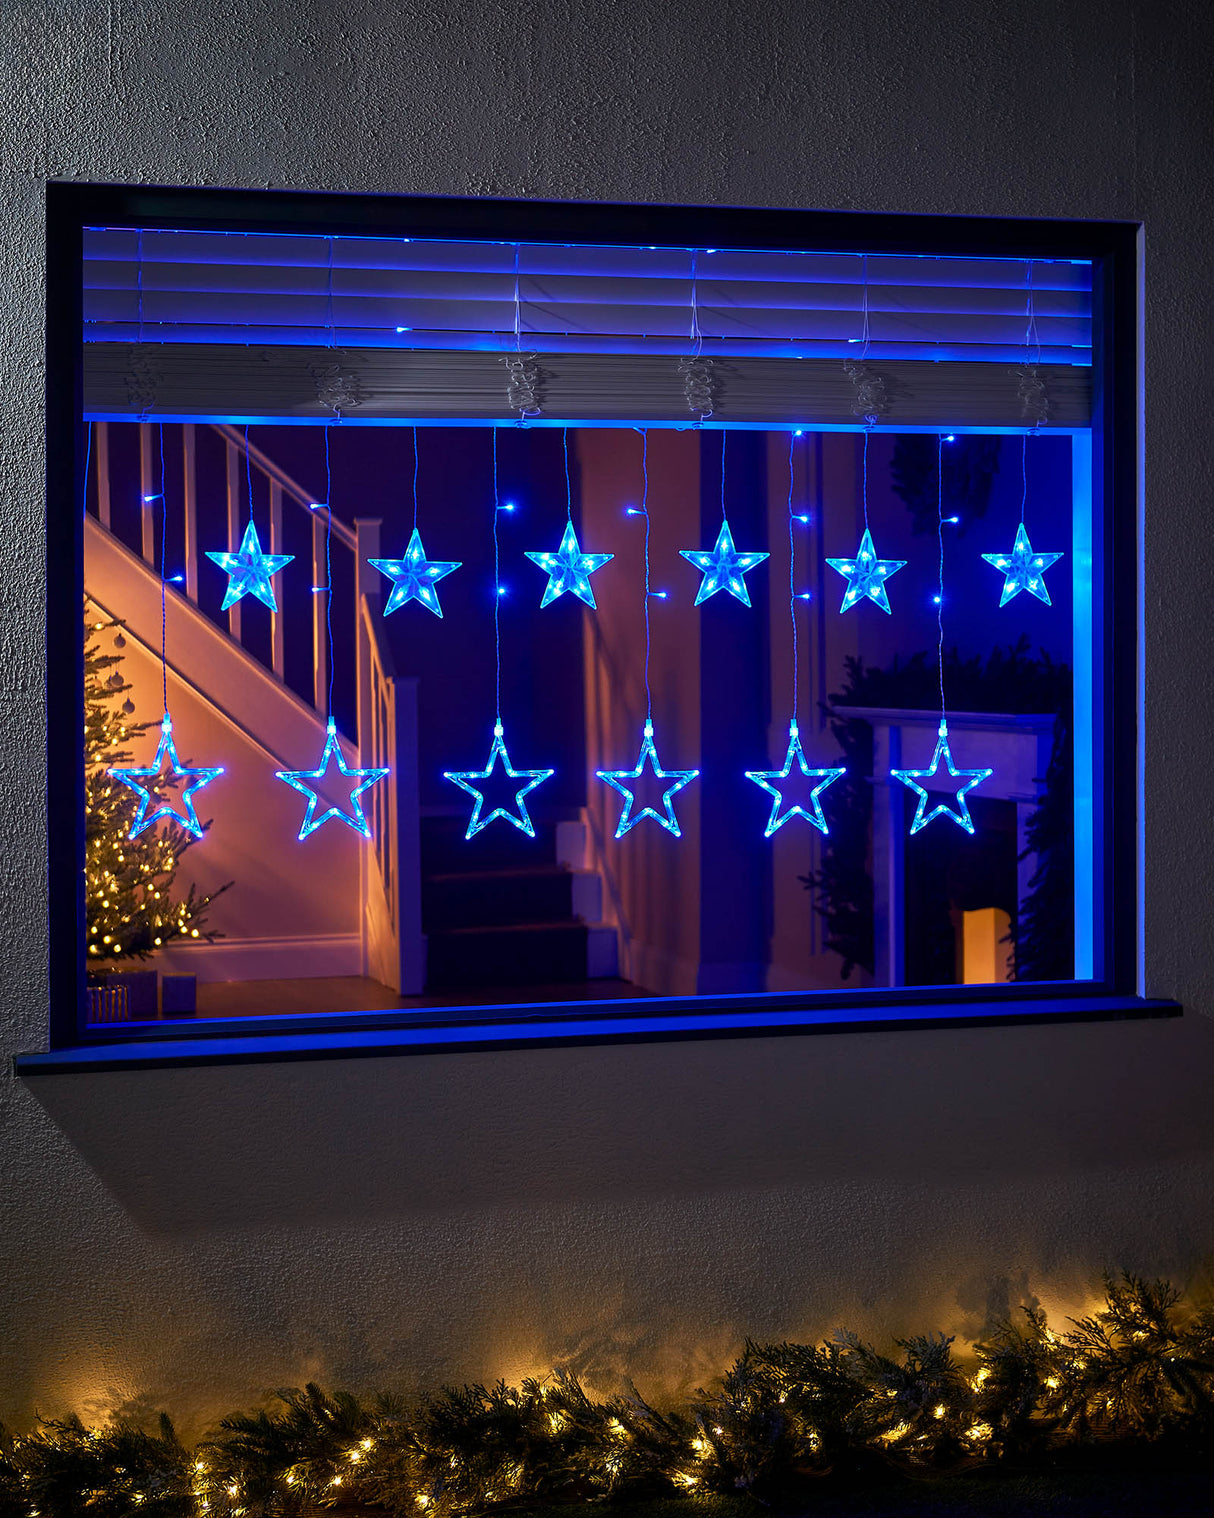 Flashing Star Curtain Net Light, Blue, 2 m